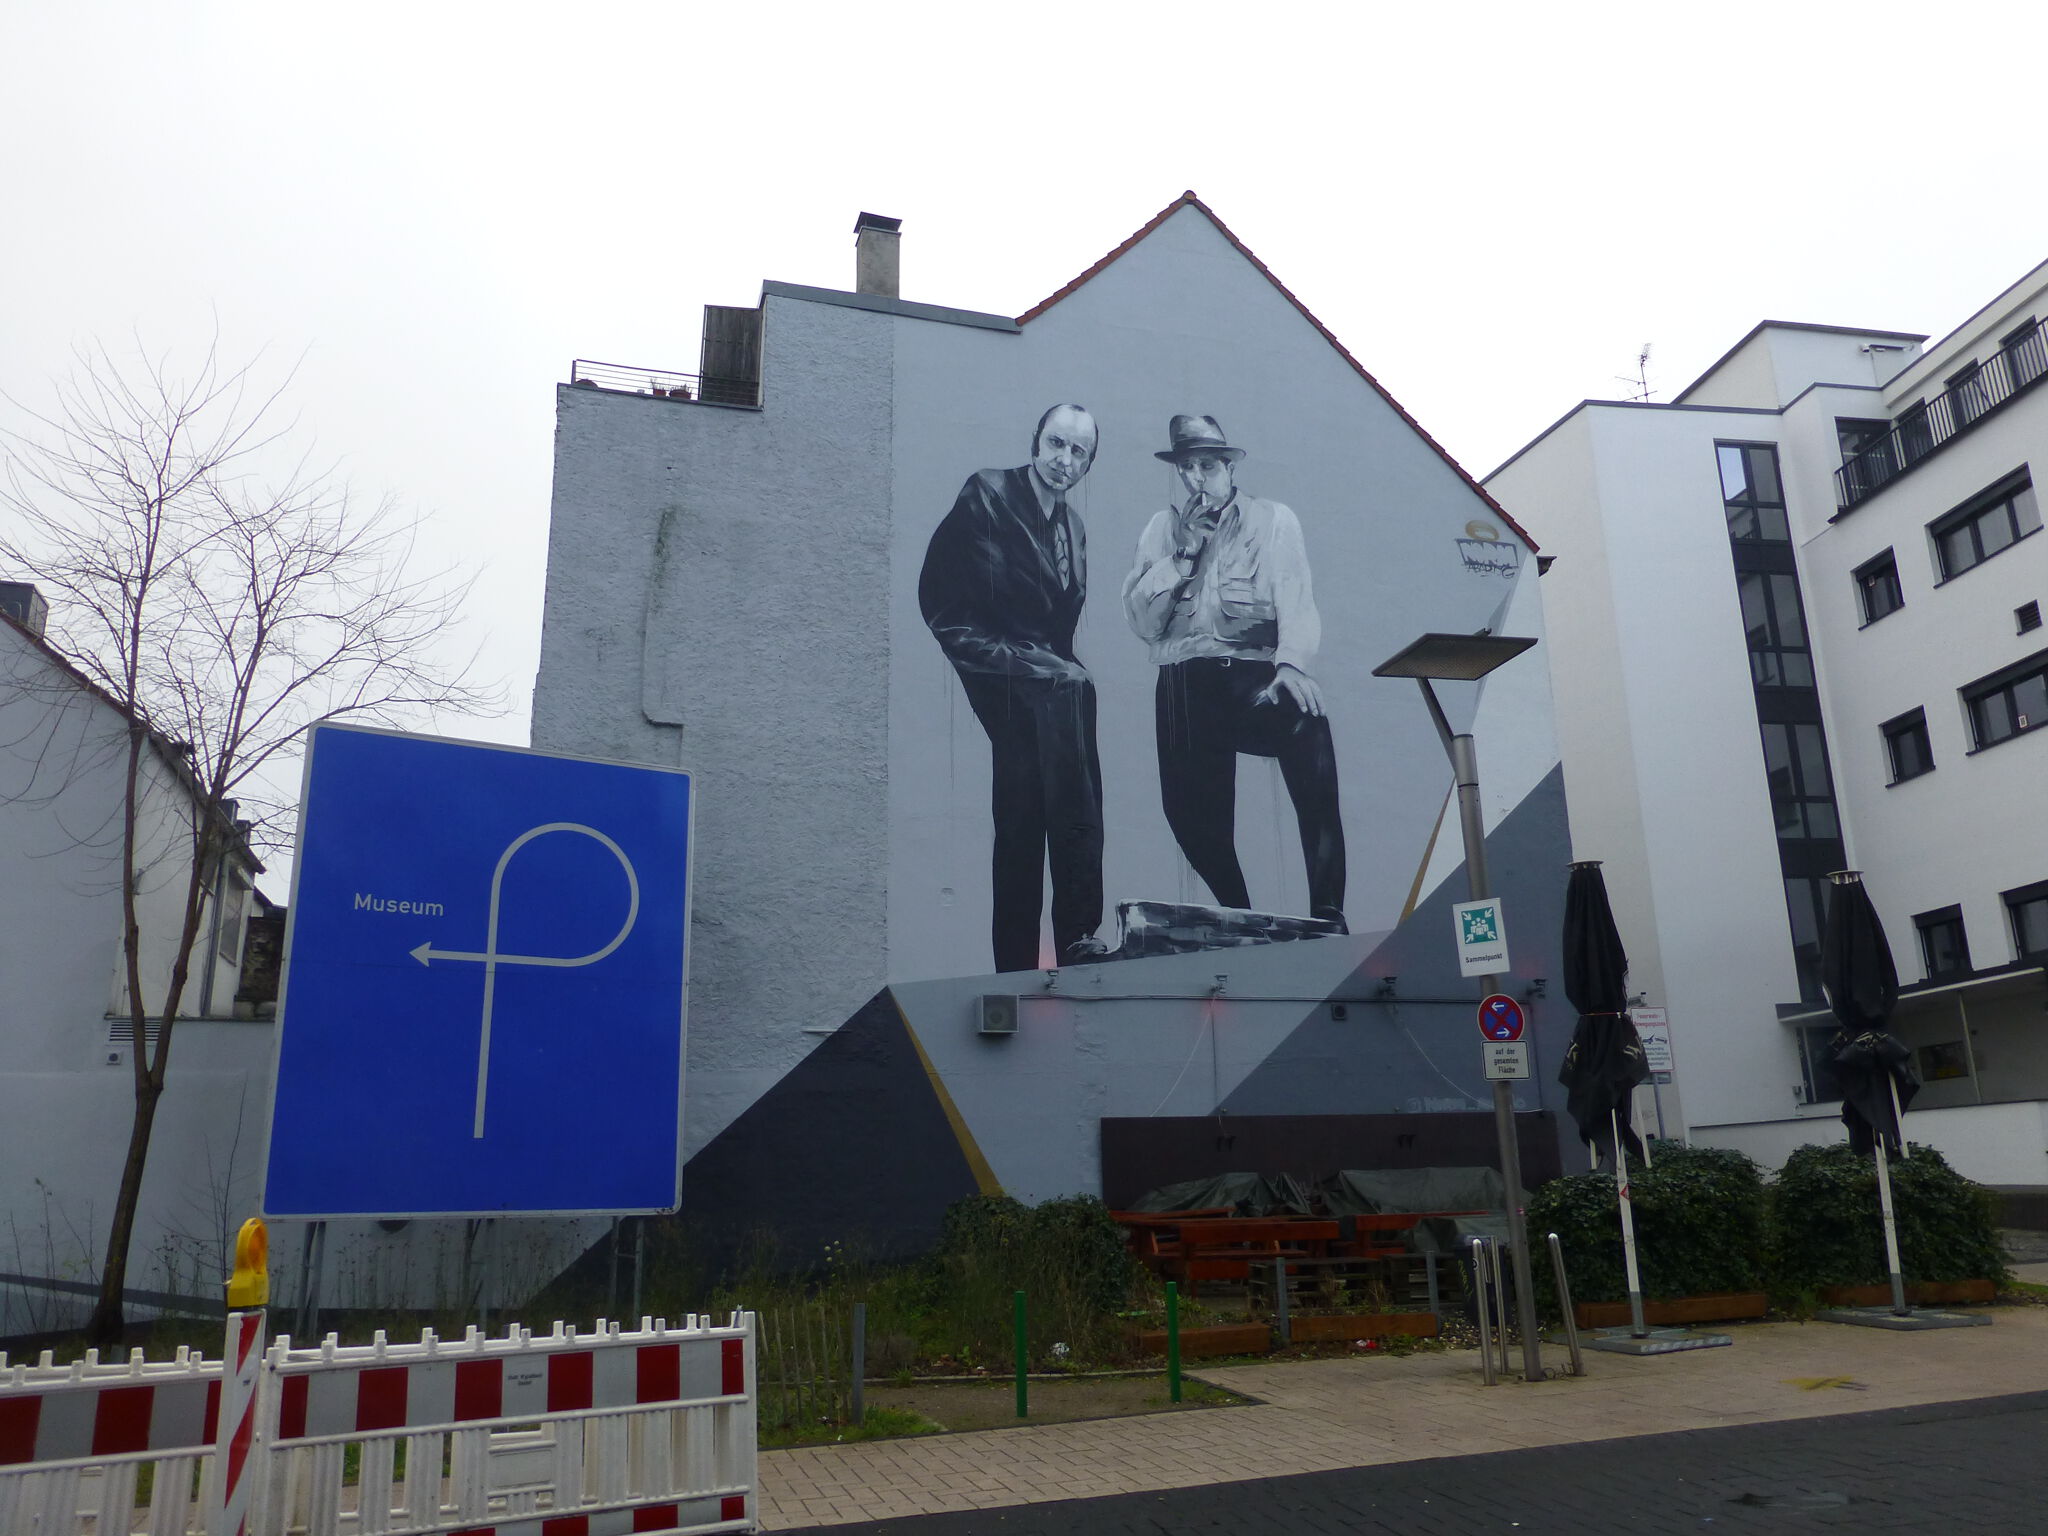 Phil Norm&mdash;Joseph Beuys & Johannes Cladders